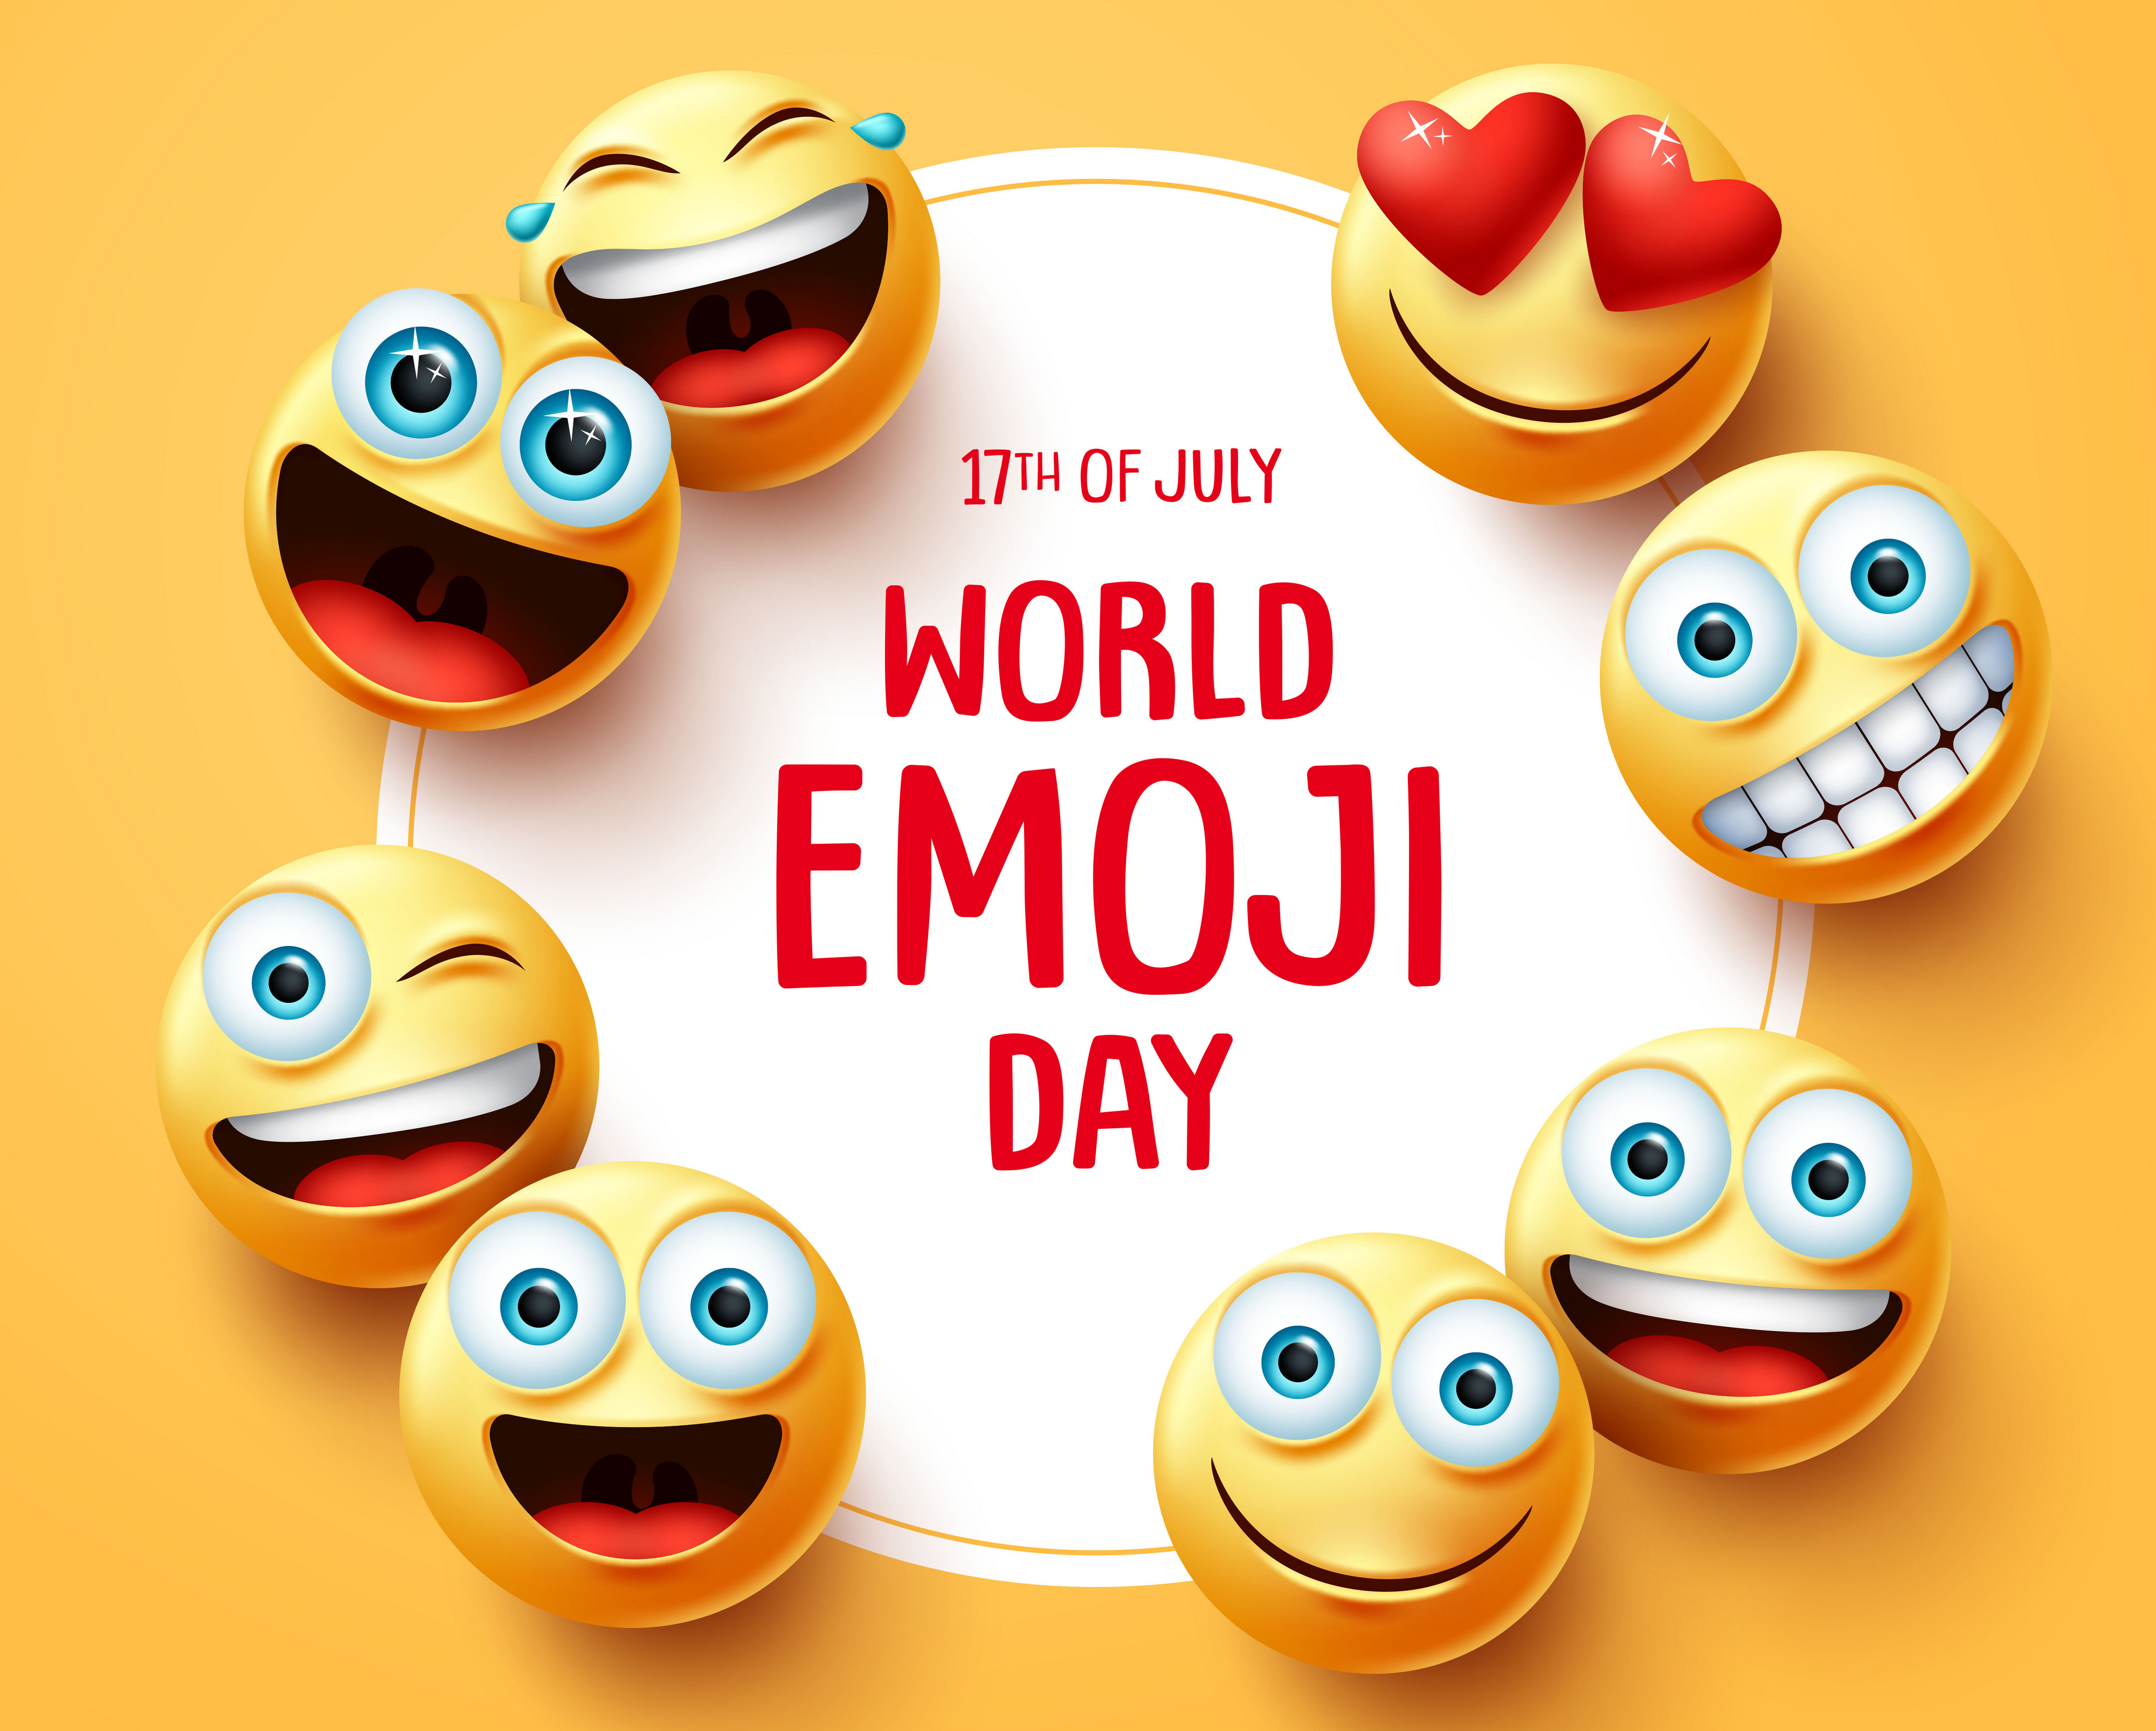 Happy World Emoji Day! 🥳